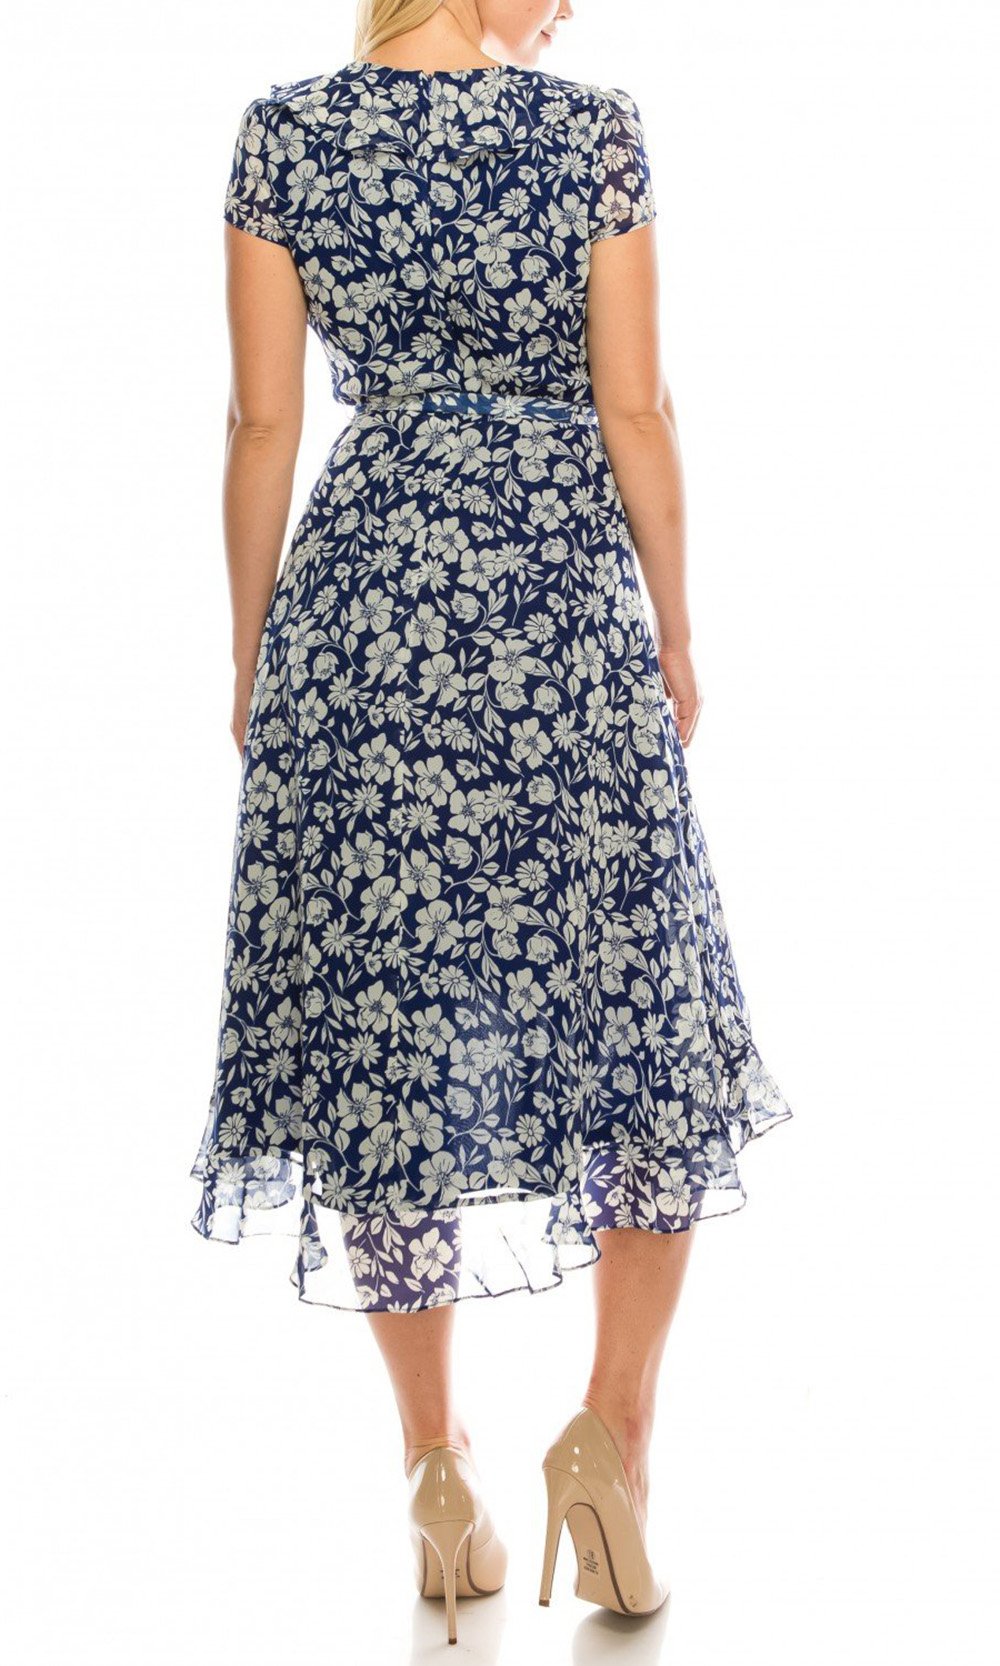 Gabby Skye - 57384MG Floral Print Ruffle Trim Chiffon High Low Dress In Blue and White